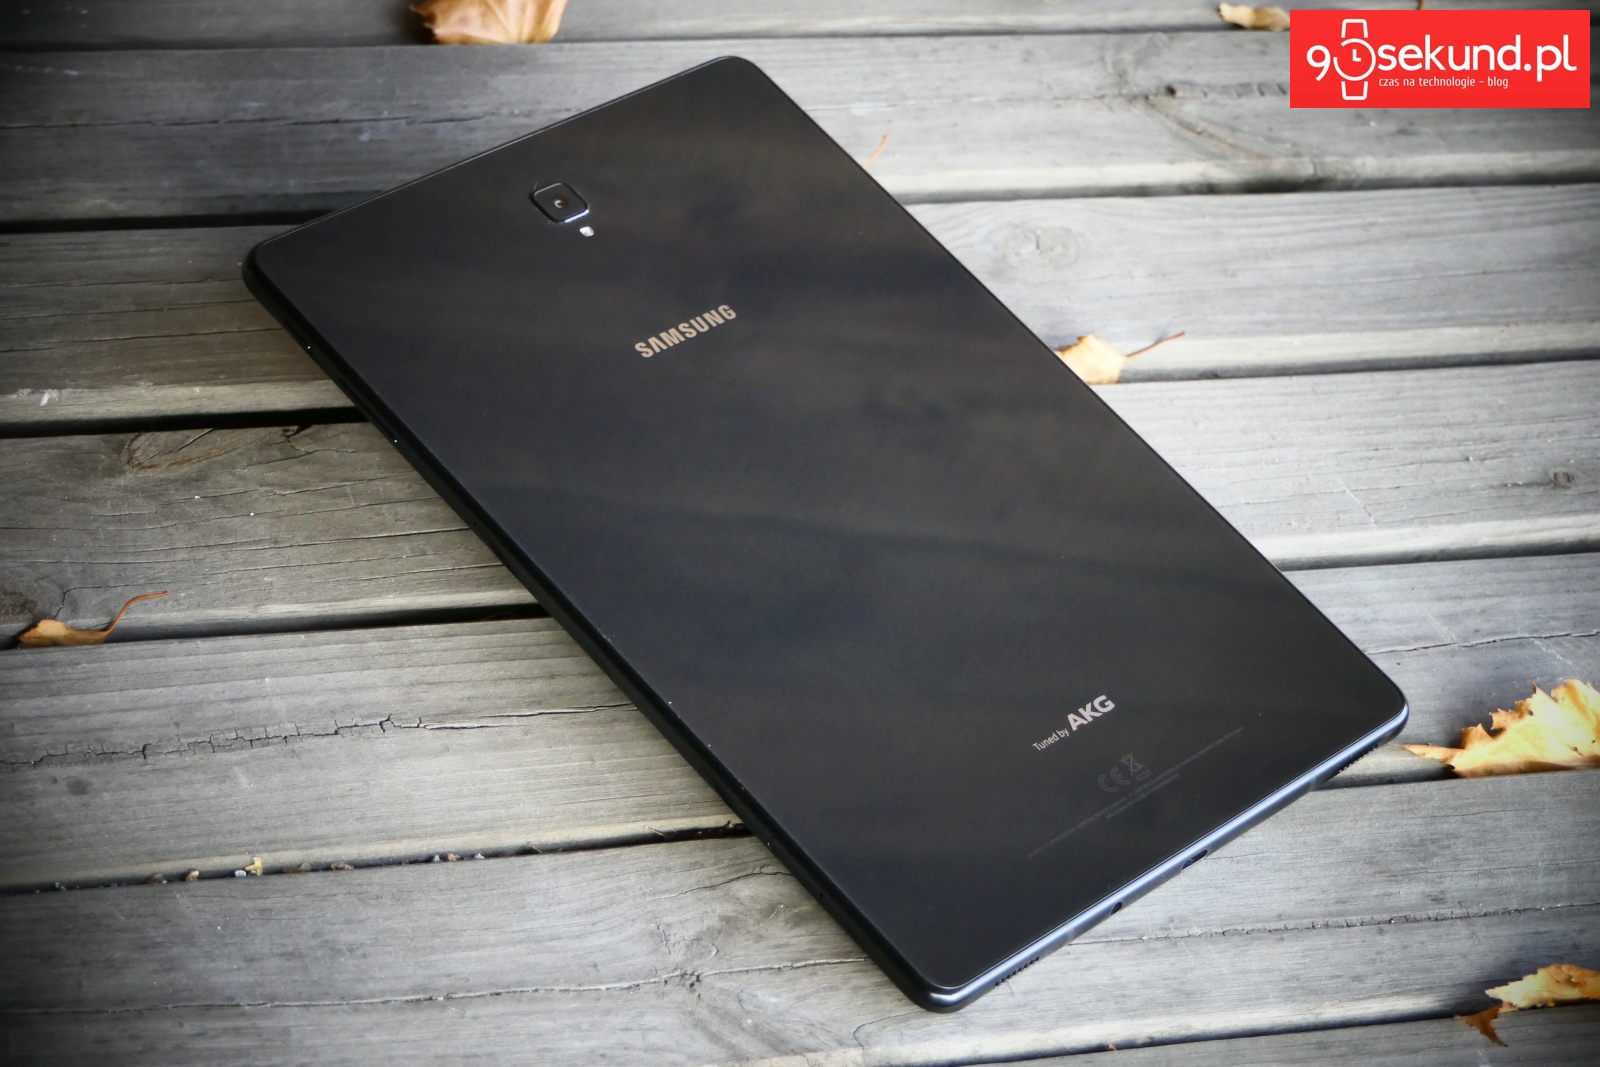 Recenzja tabletu Samsung Galaxy Tab S4 - Michał Brożyński - 90sekund.pl